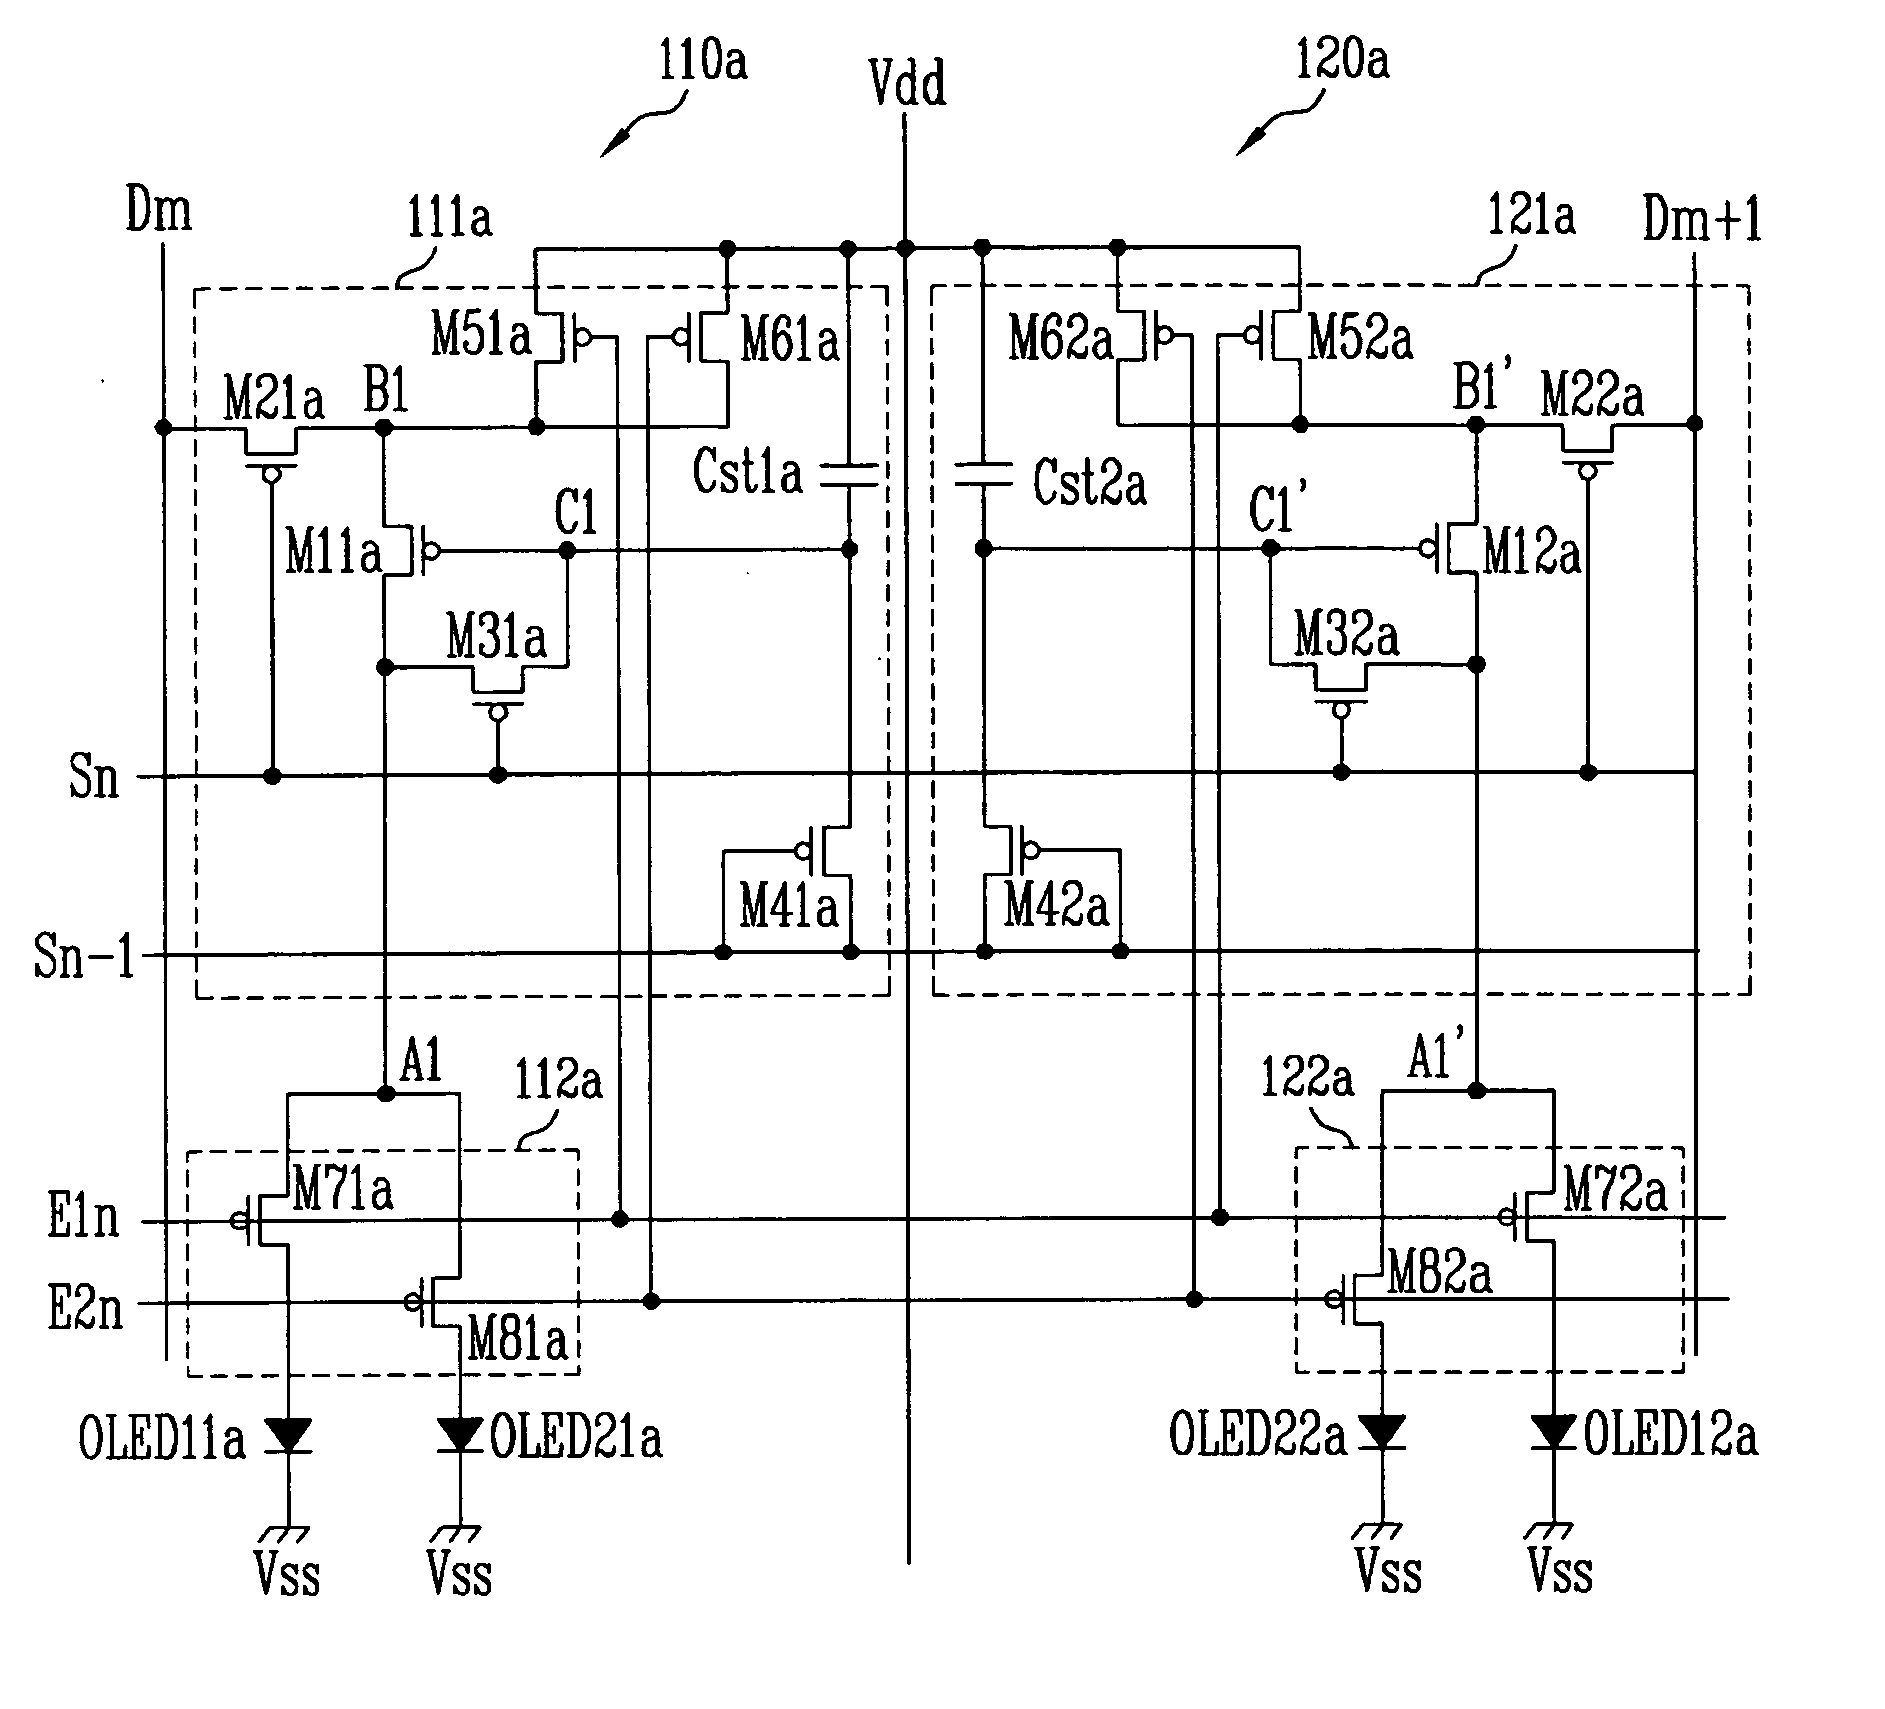 Pixel circuit and light emitting display